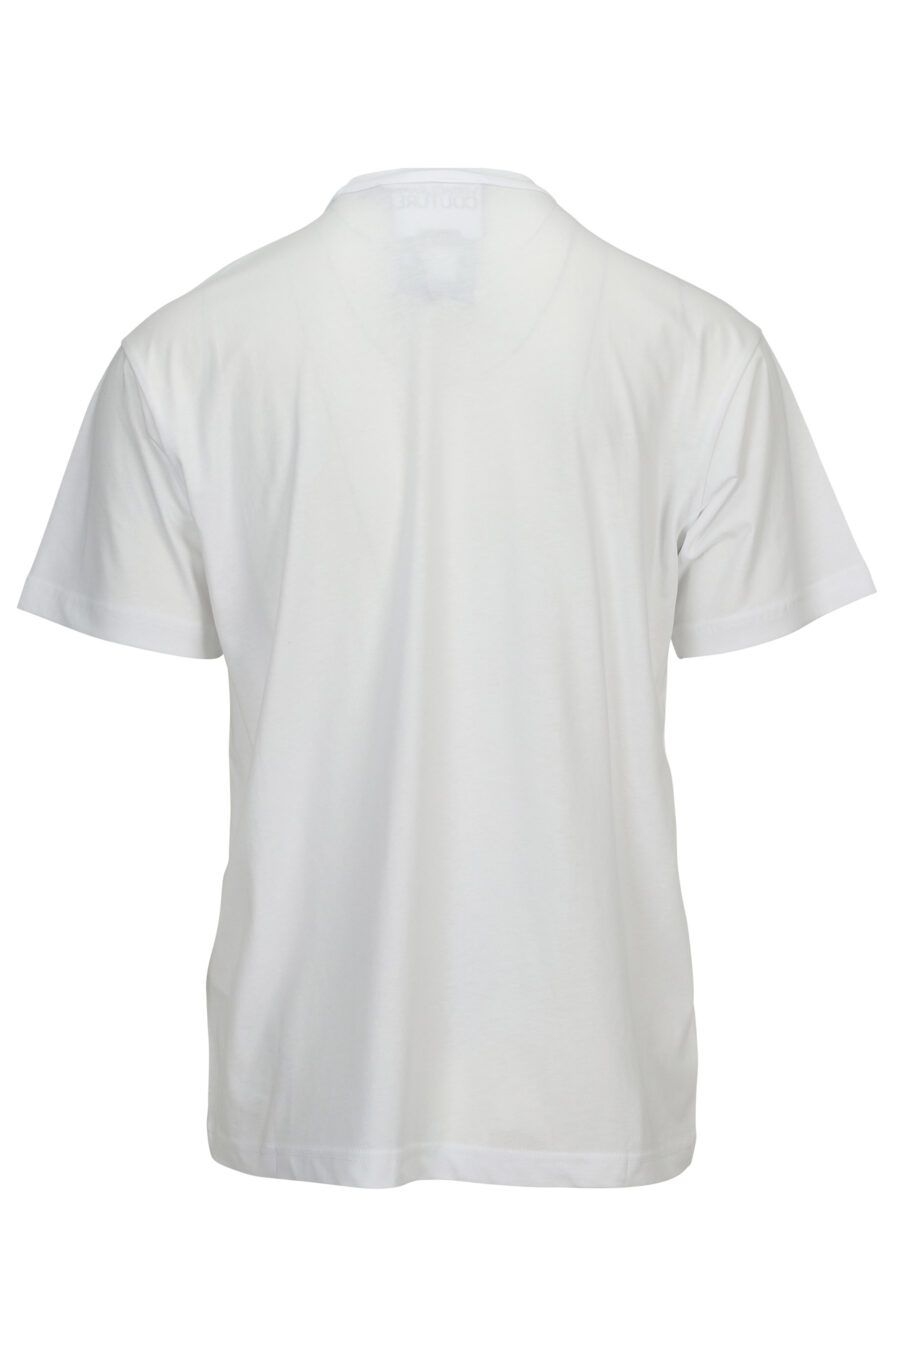 Camiseta blanca con maxilogo negro delante - 8052019579666 1